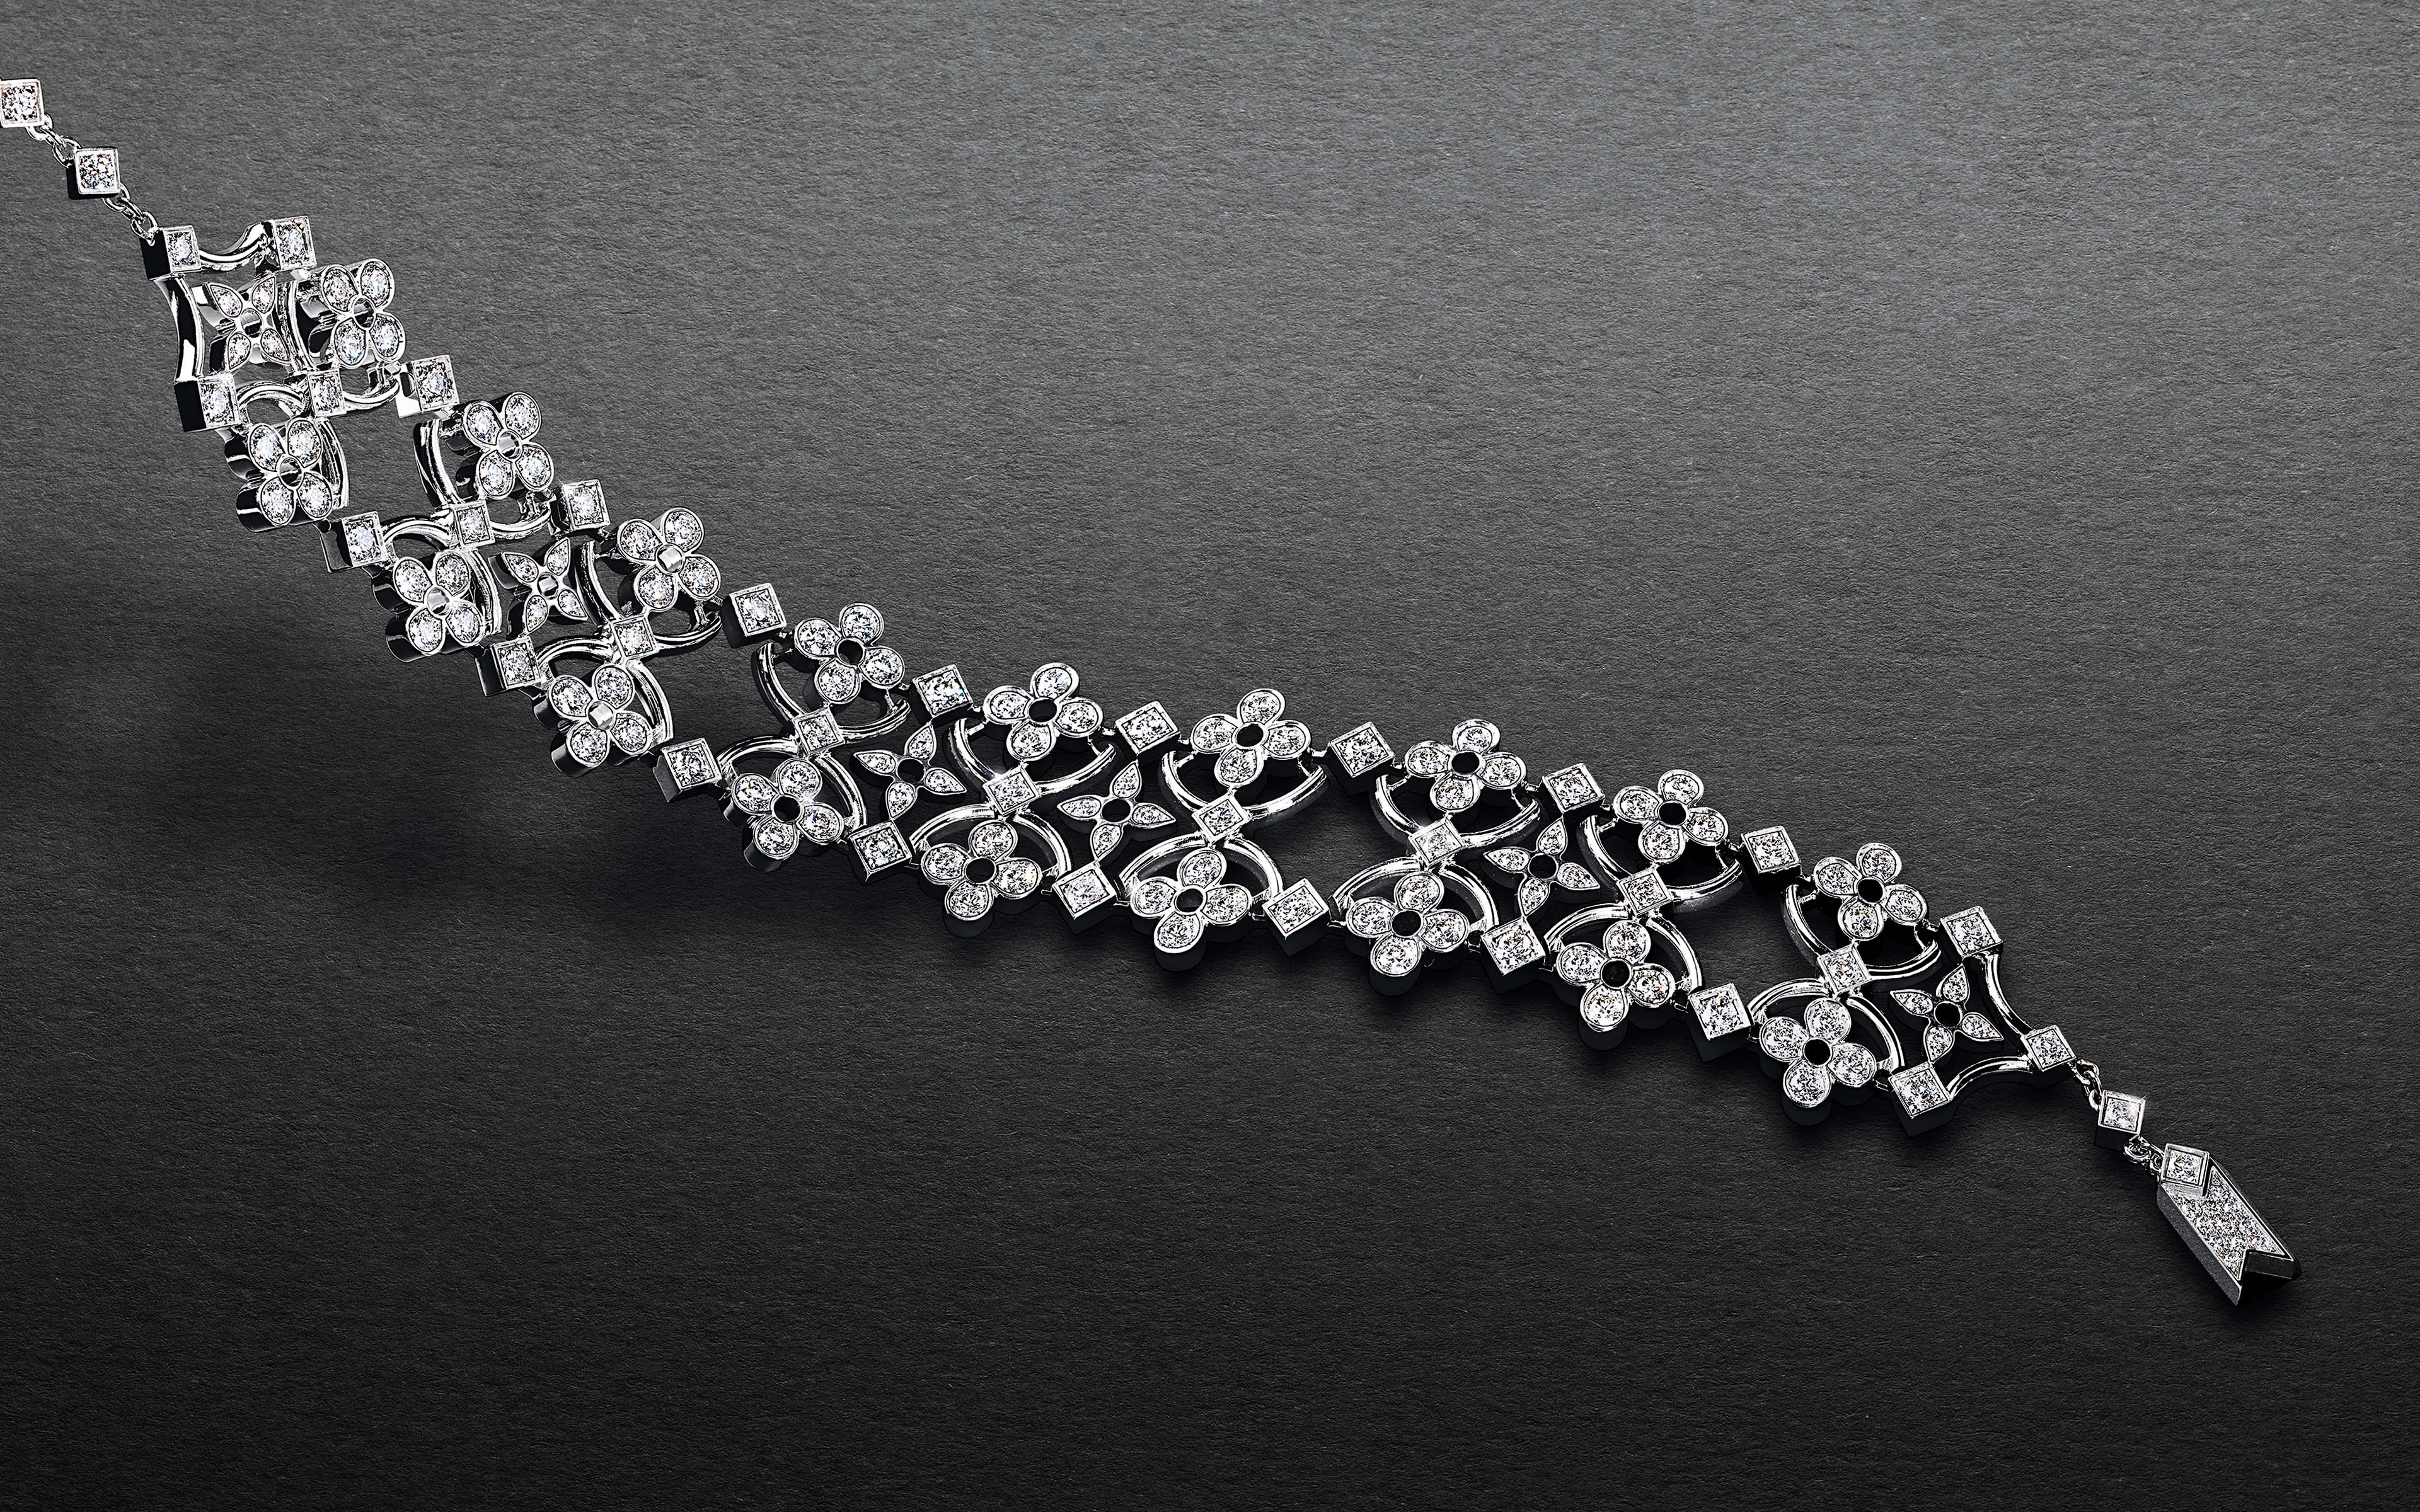 Louis Vuitton Monogram Diamond Bracelet Pattern